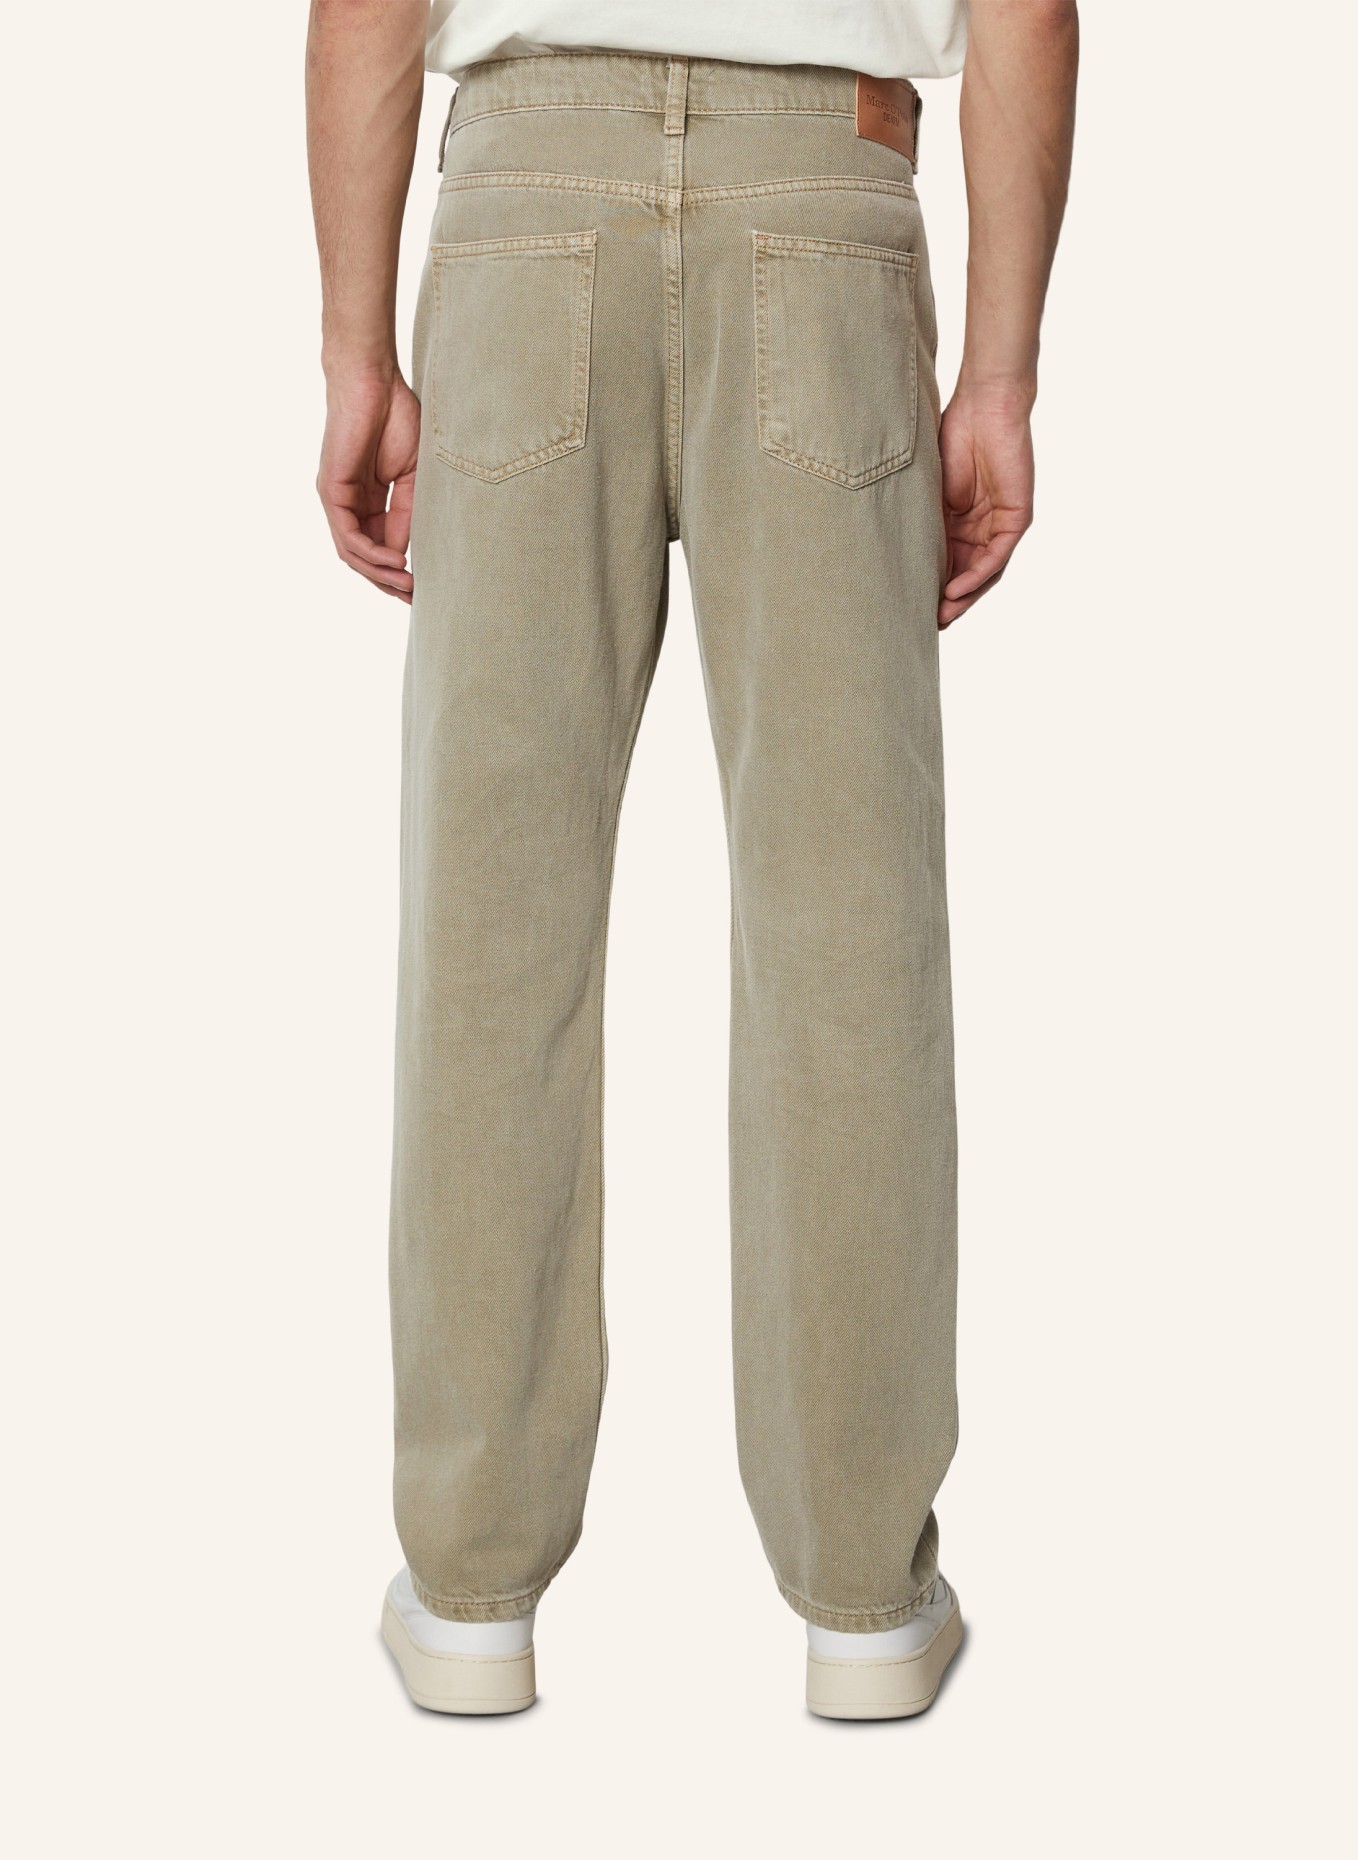 Marc O'Polo DENIM Jeans Modell SVERRE STRAIGHT, Farbe: BEIGE (Bild 2)